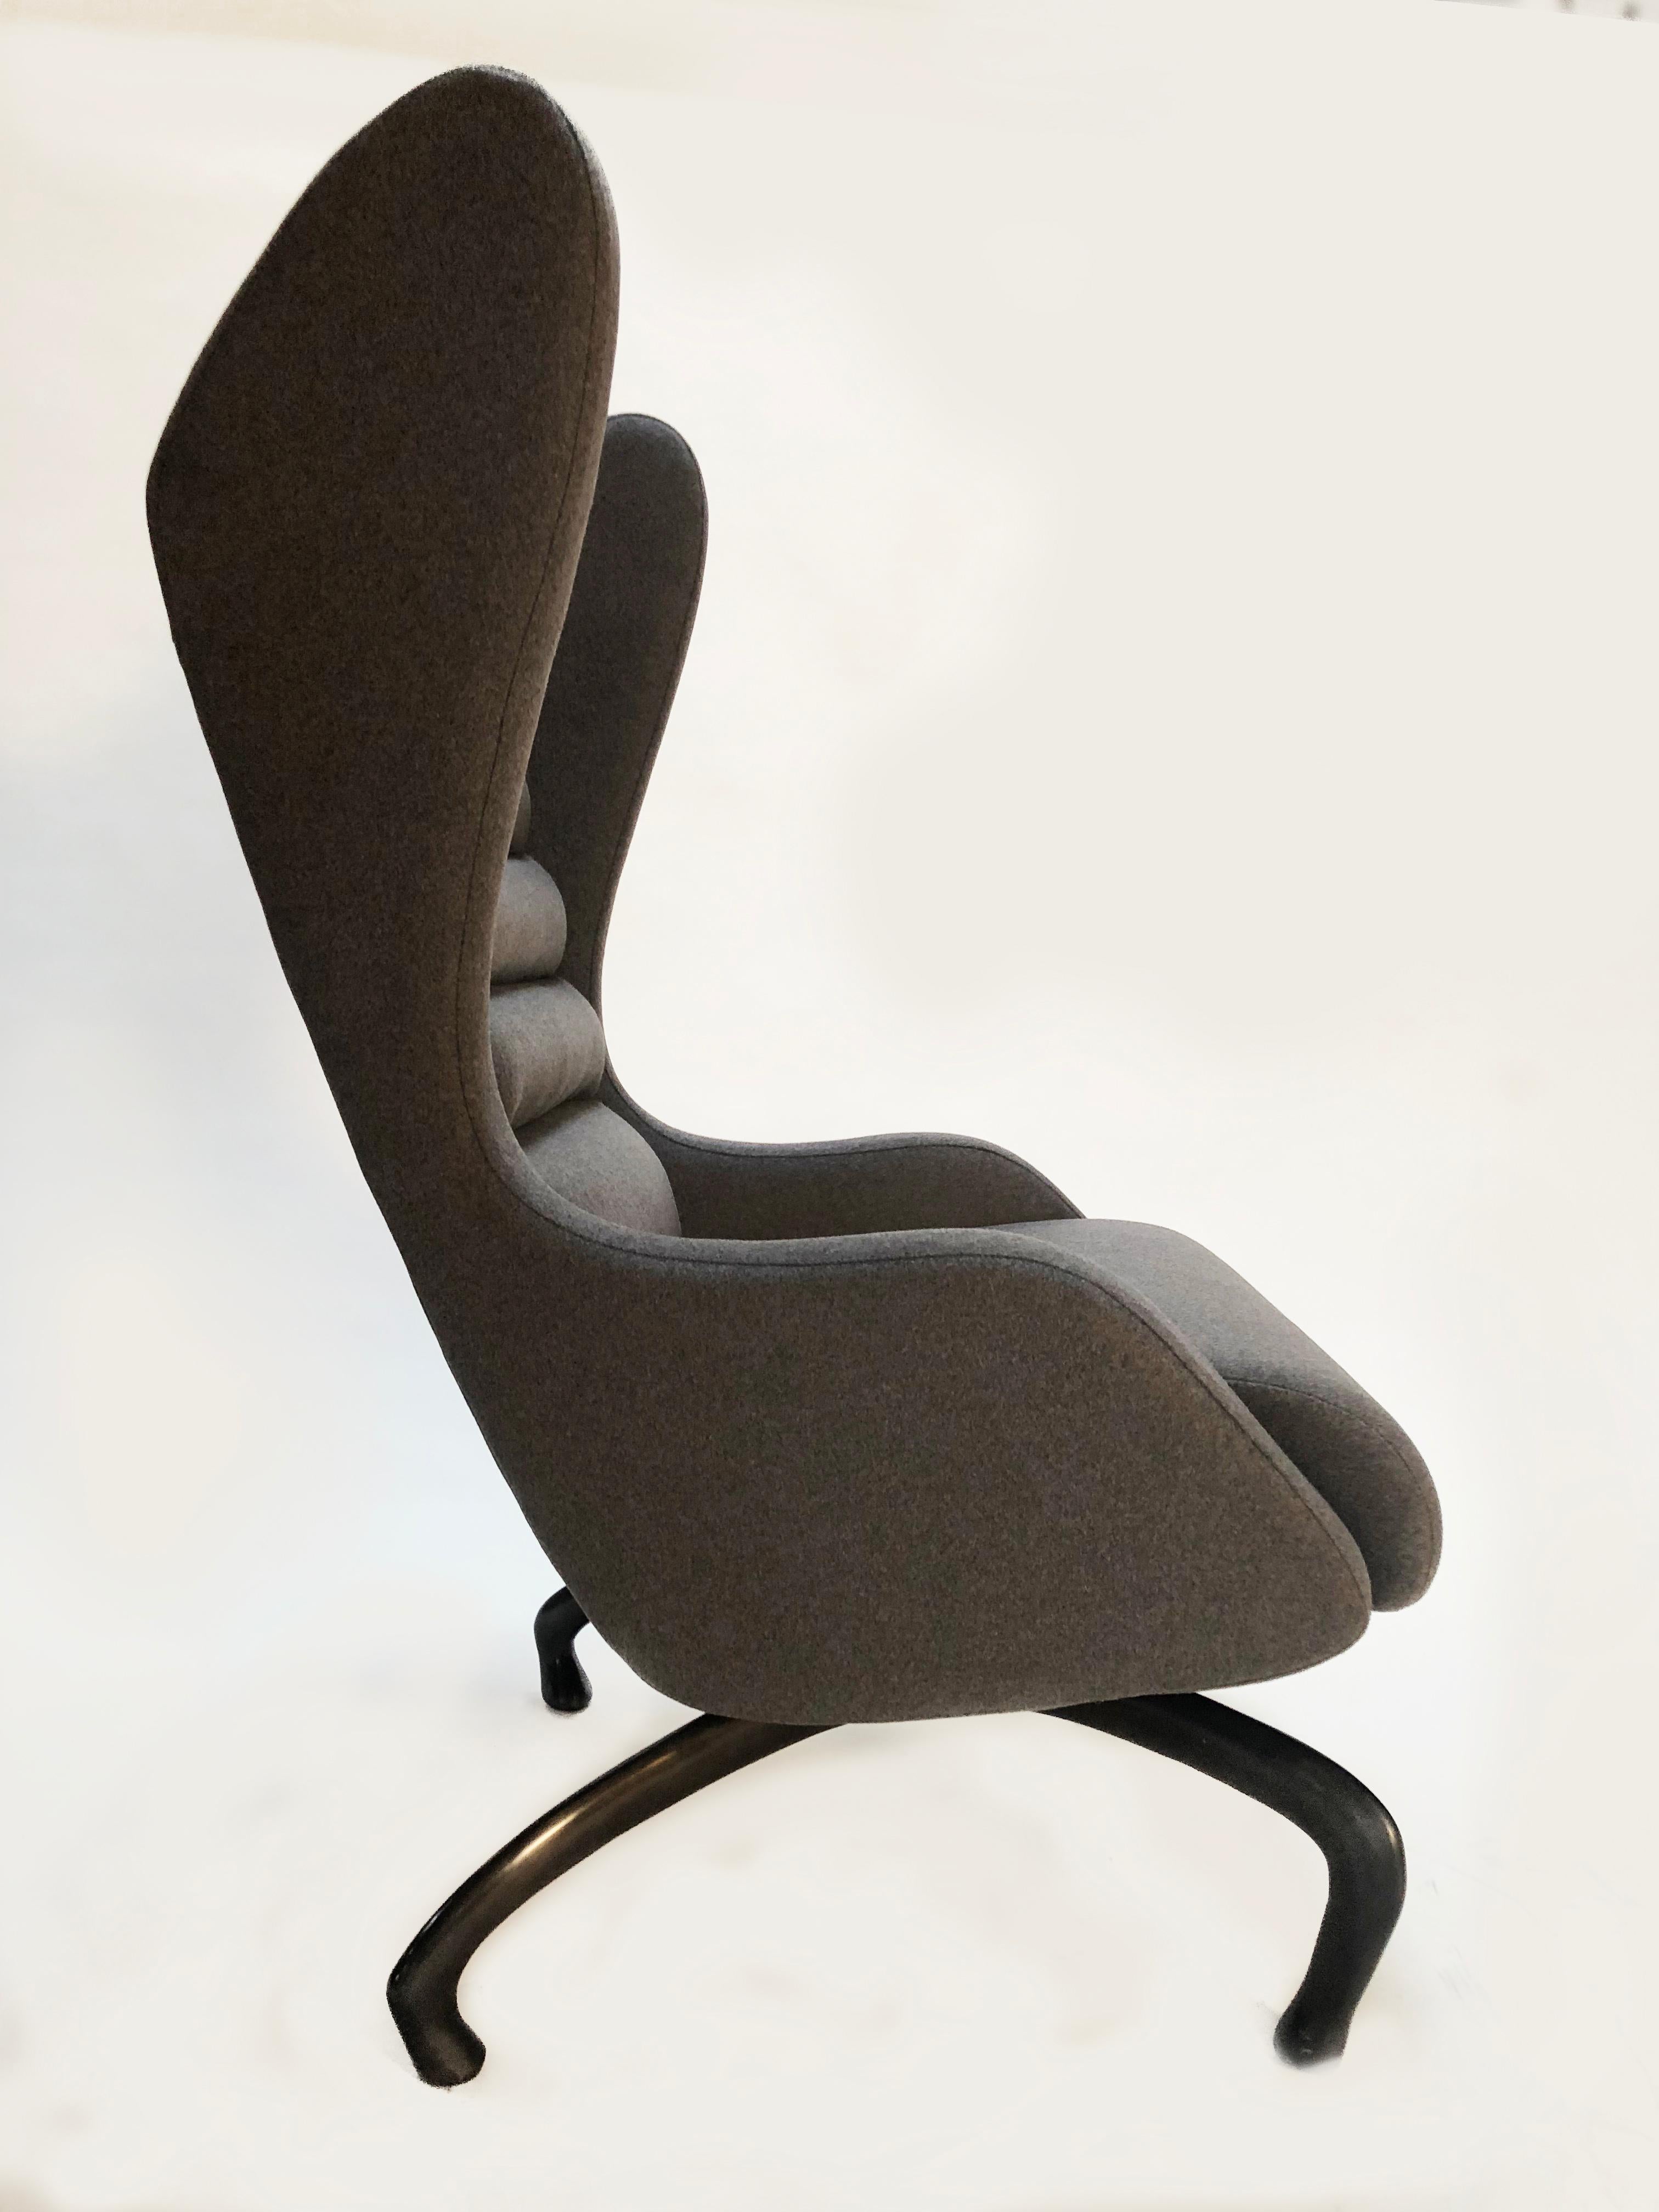 Cantering Lounge Chair, Wool Flannel / Cast Aluminum, Jordan Mozer, USA, 2003/18 For Sale 8